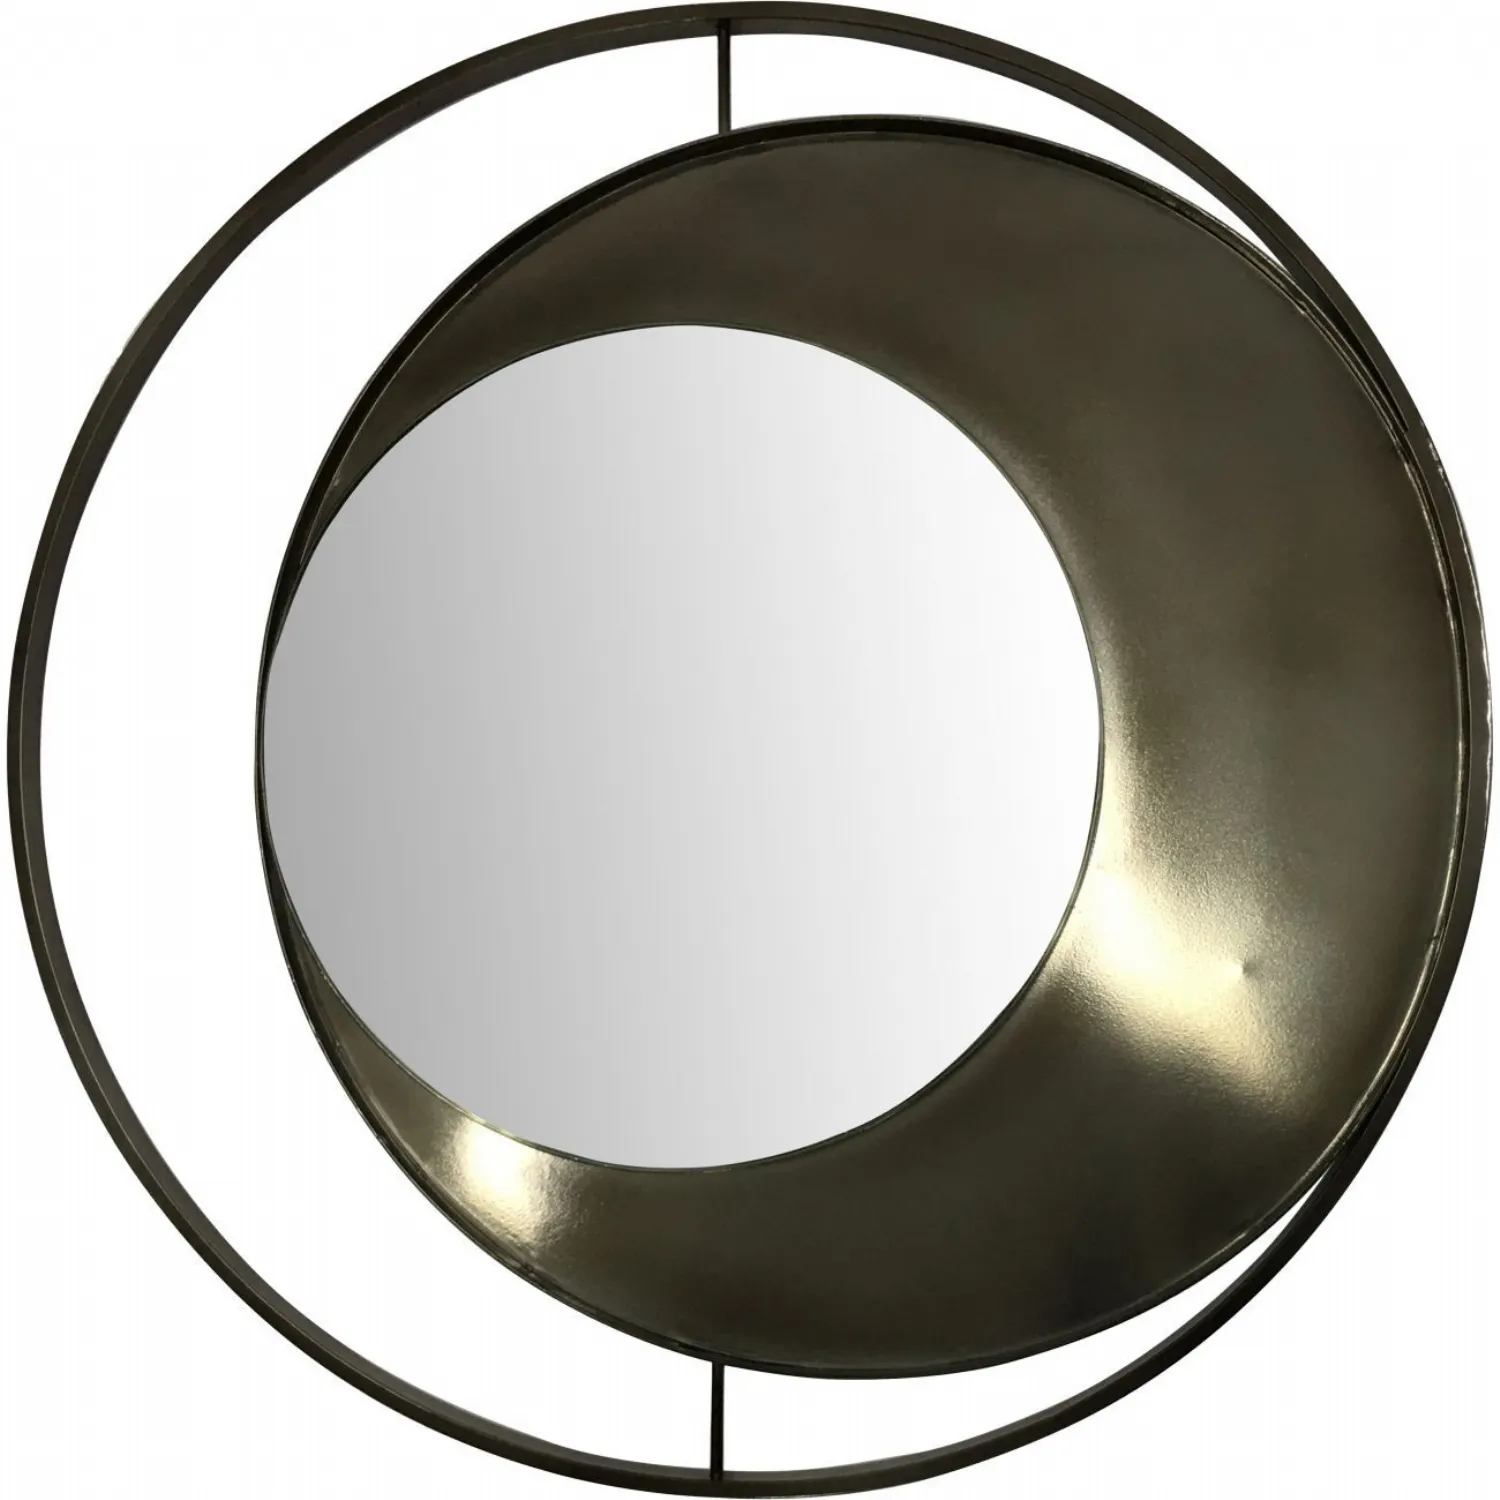 Black Nickel Circles Metal Wall Mirror 100cm Diameter